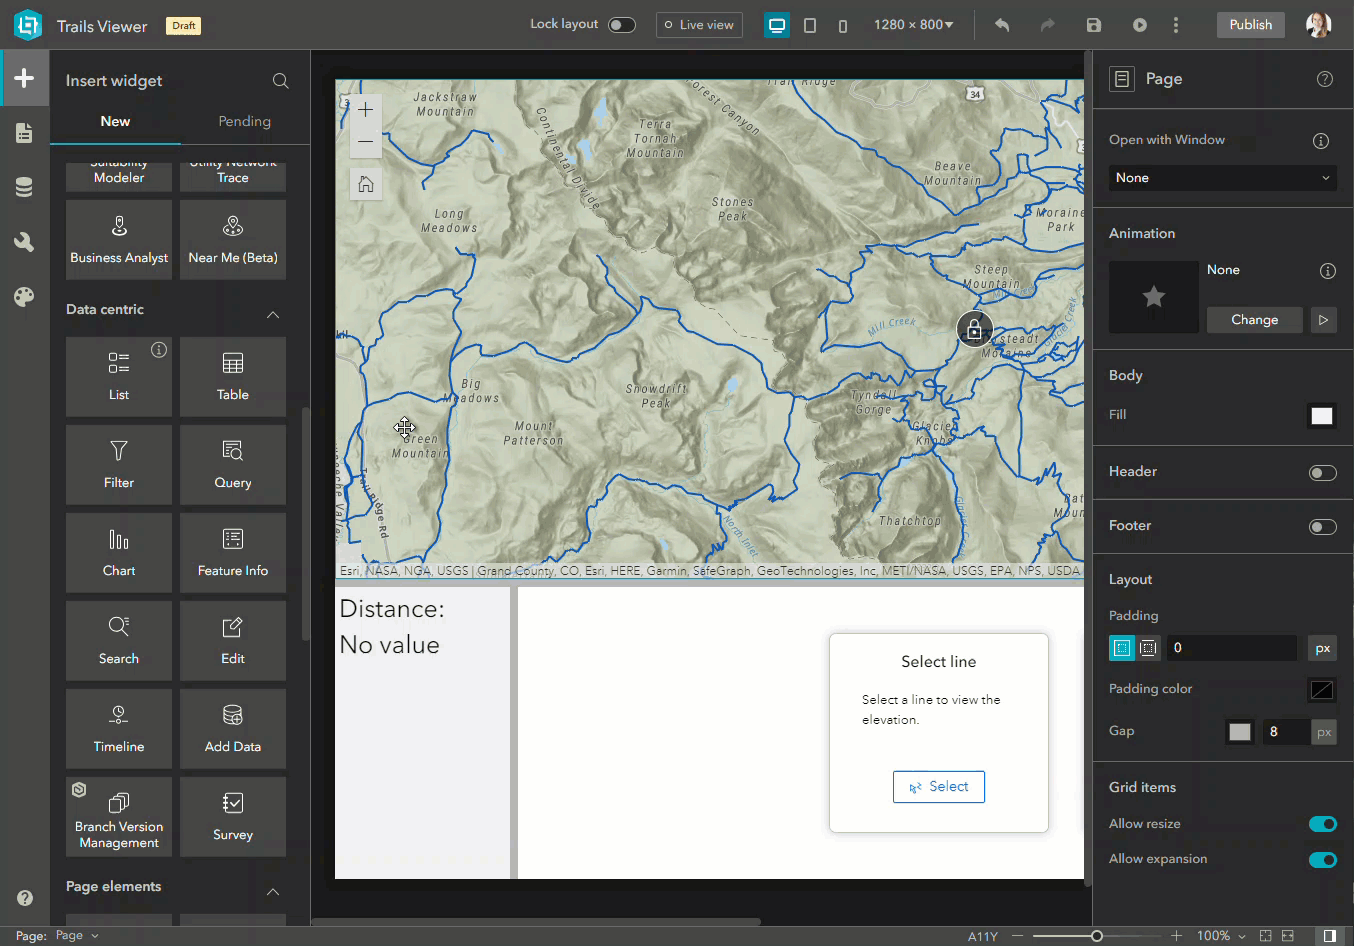 Add the List widget to display a list of trails